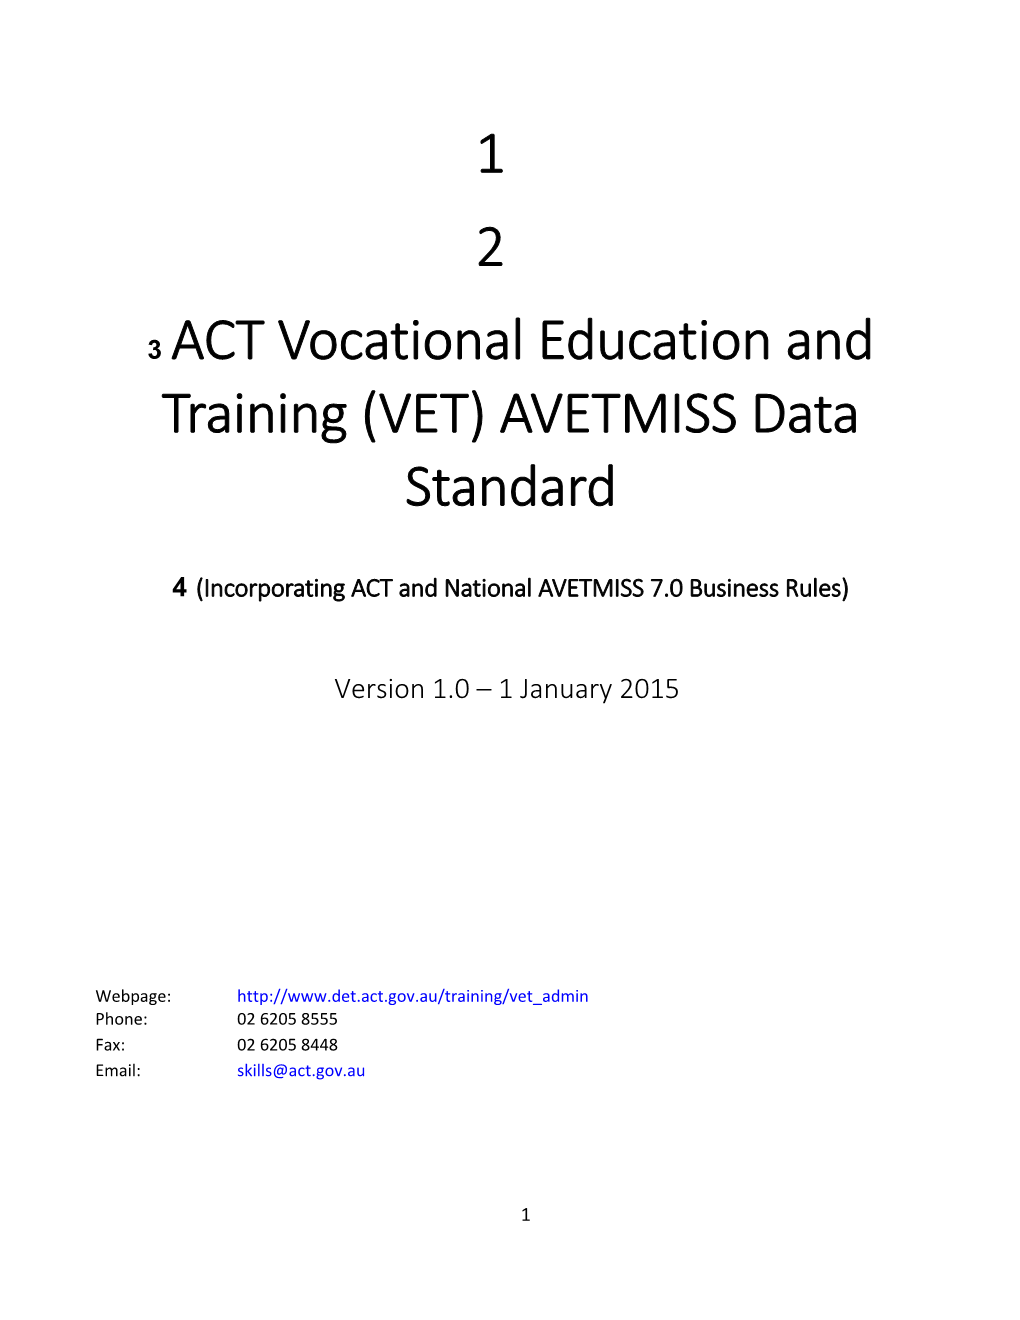 ACT Vocational Education and Training (VET) AVETMISS Data Standard